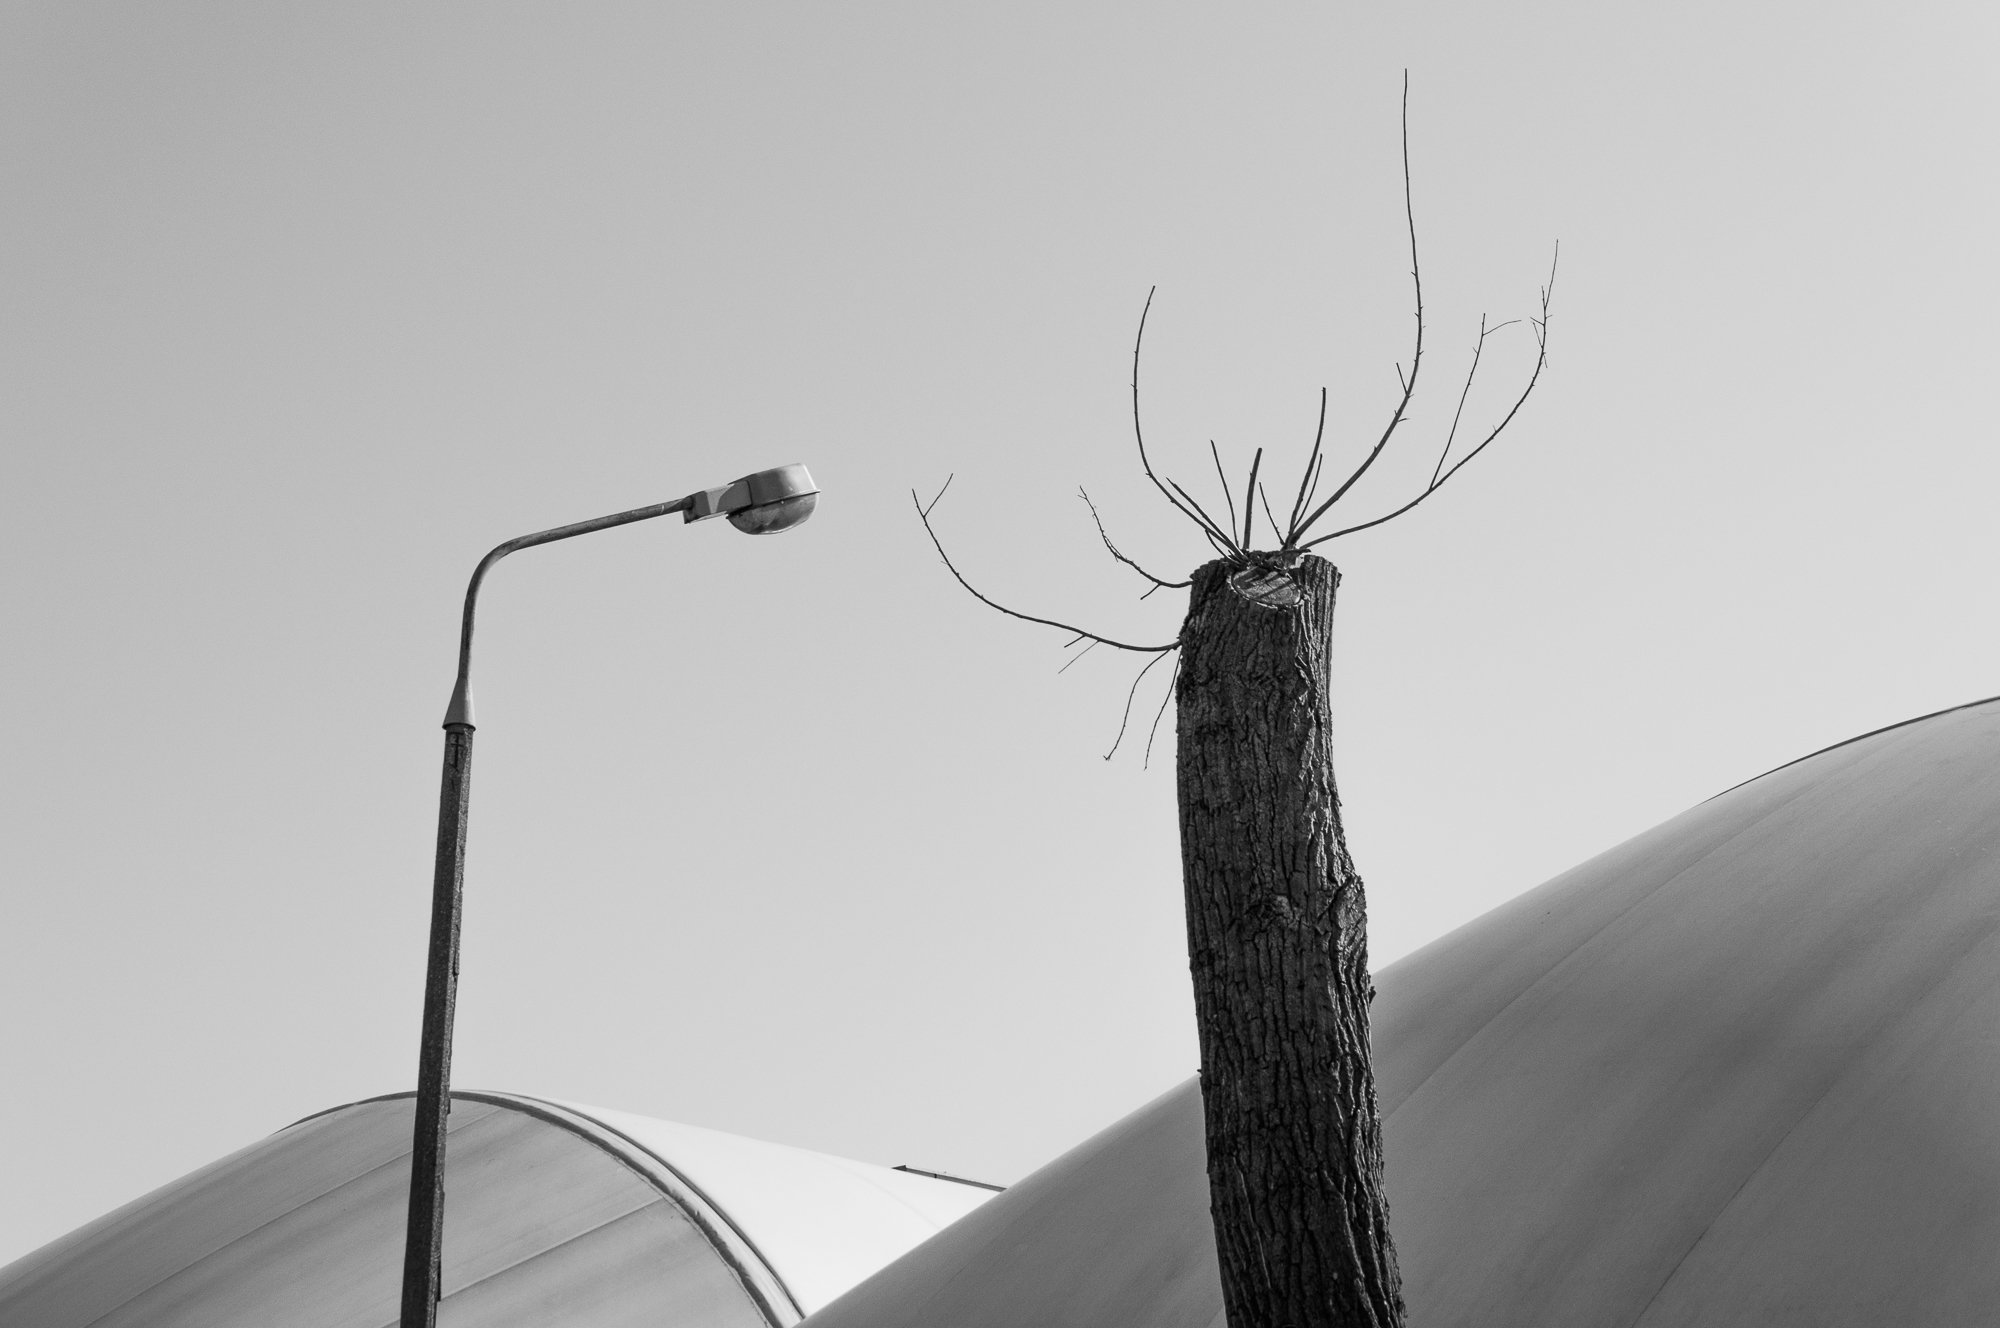 Adam Mazek Photography Warsaw (Warszawa) 2019. Post: "The way of seeing." Minimalism. Street lamp and strange tree.